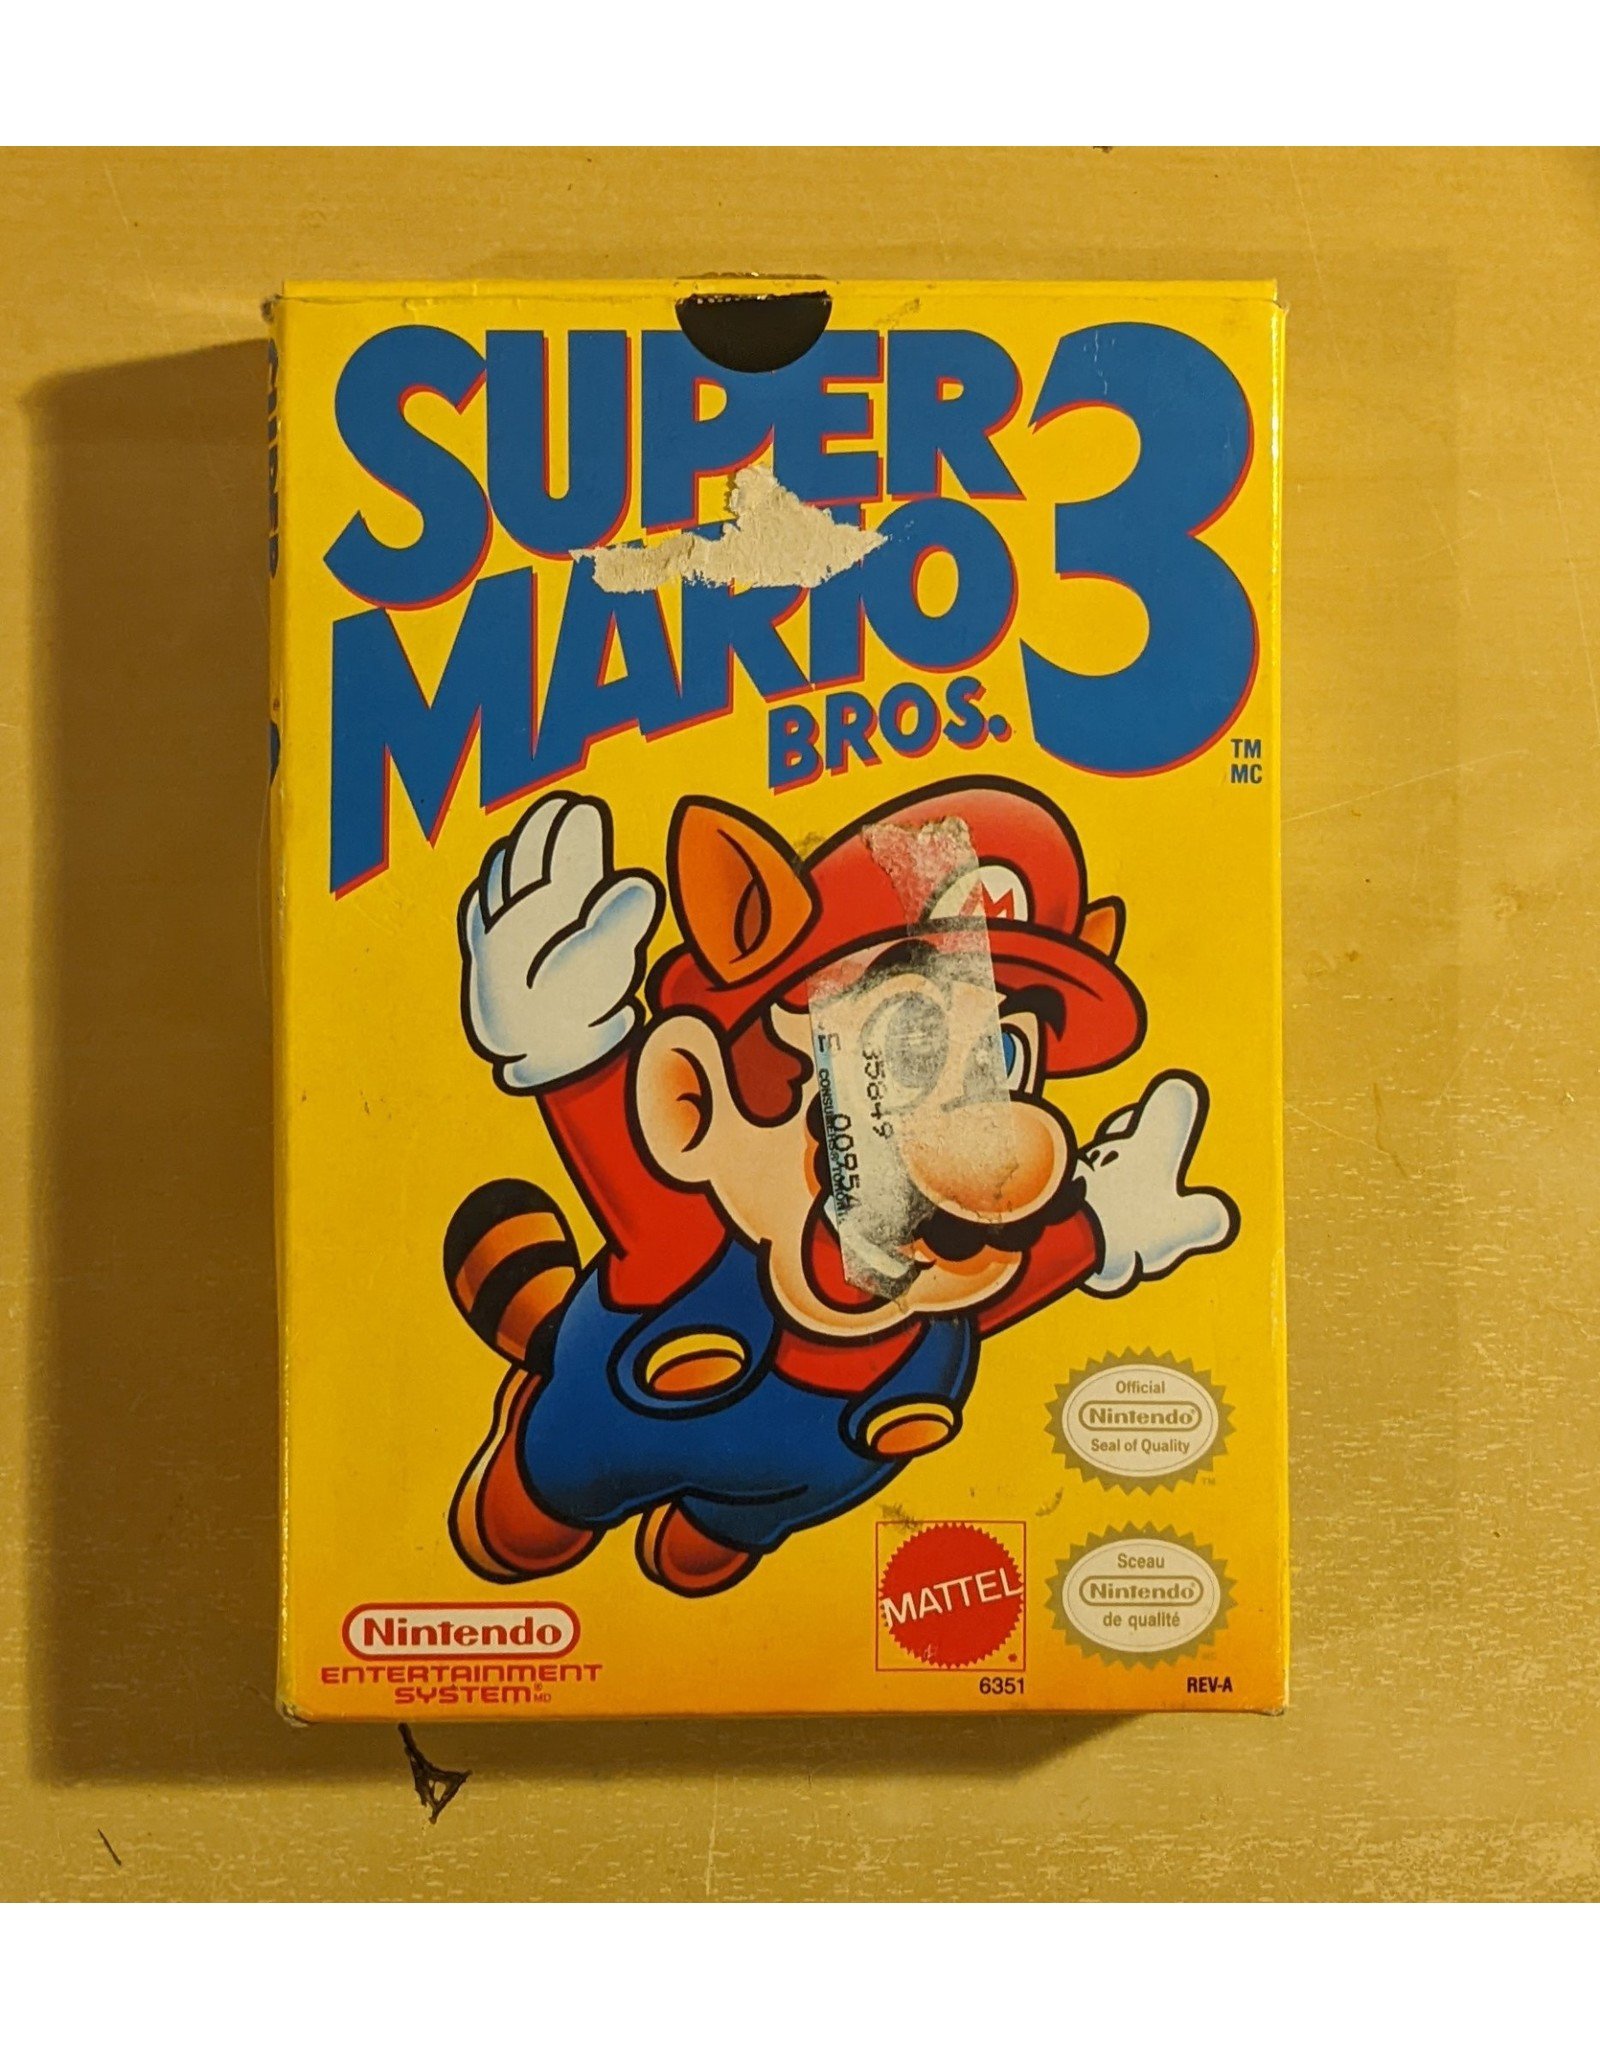 Nintendo Used Game - NES - Super Mario Bros. 3 [CIB]